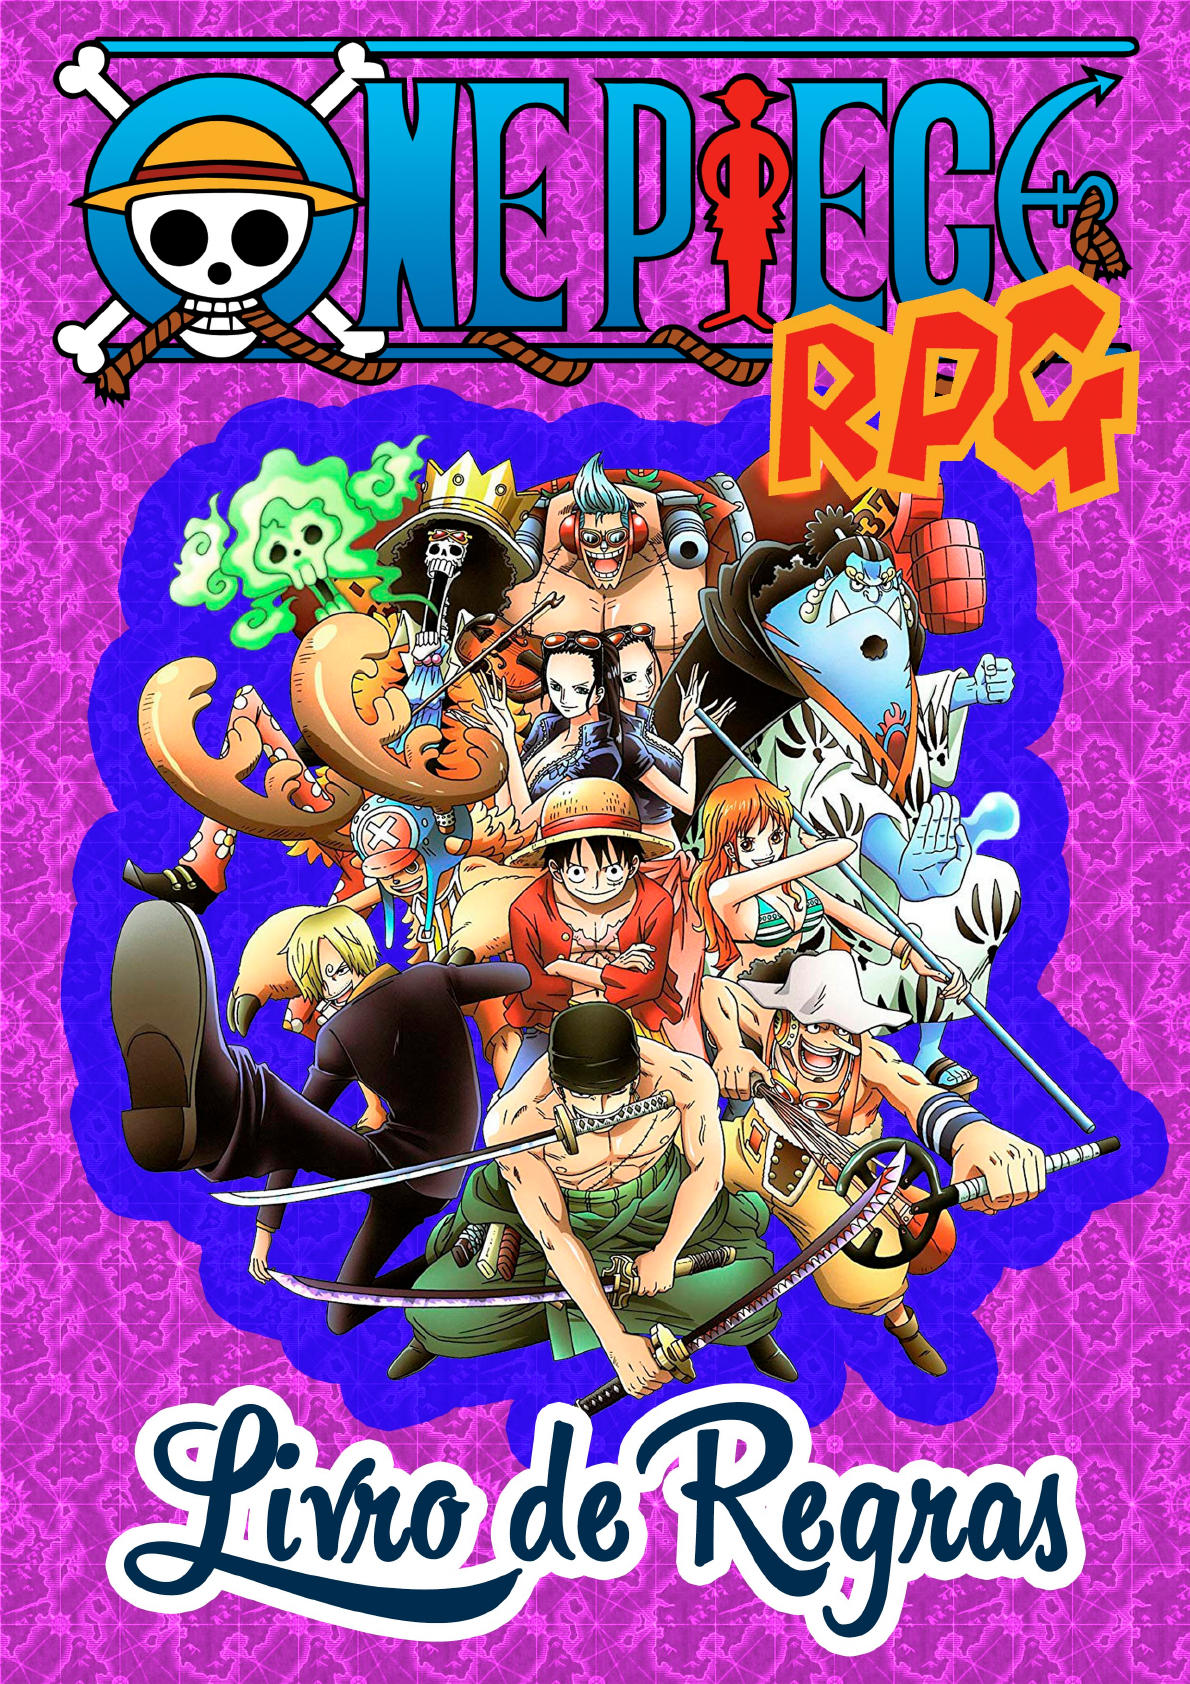 Fantasia Luffy One Piece Infantil Original + Chapéu - Shop Coopera